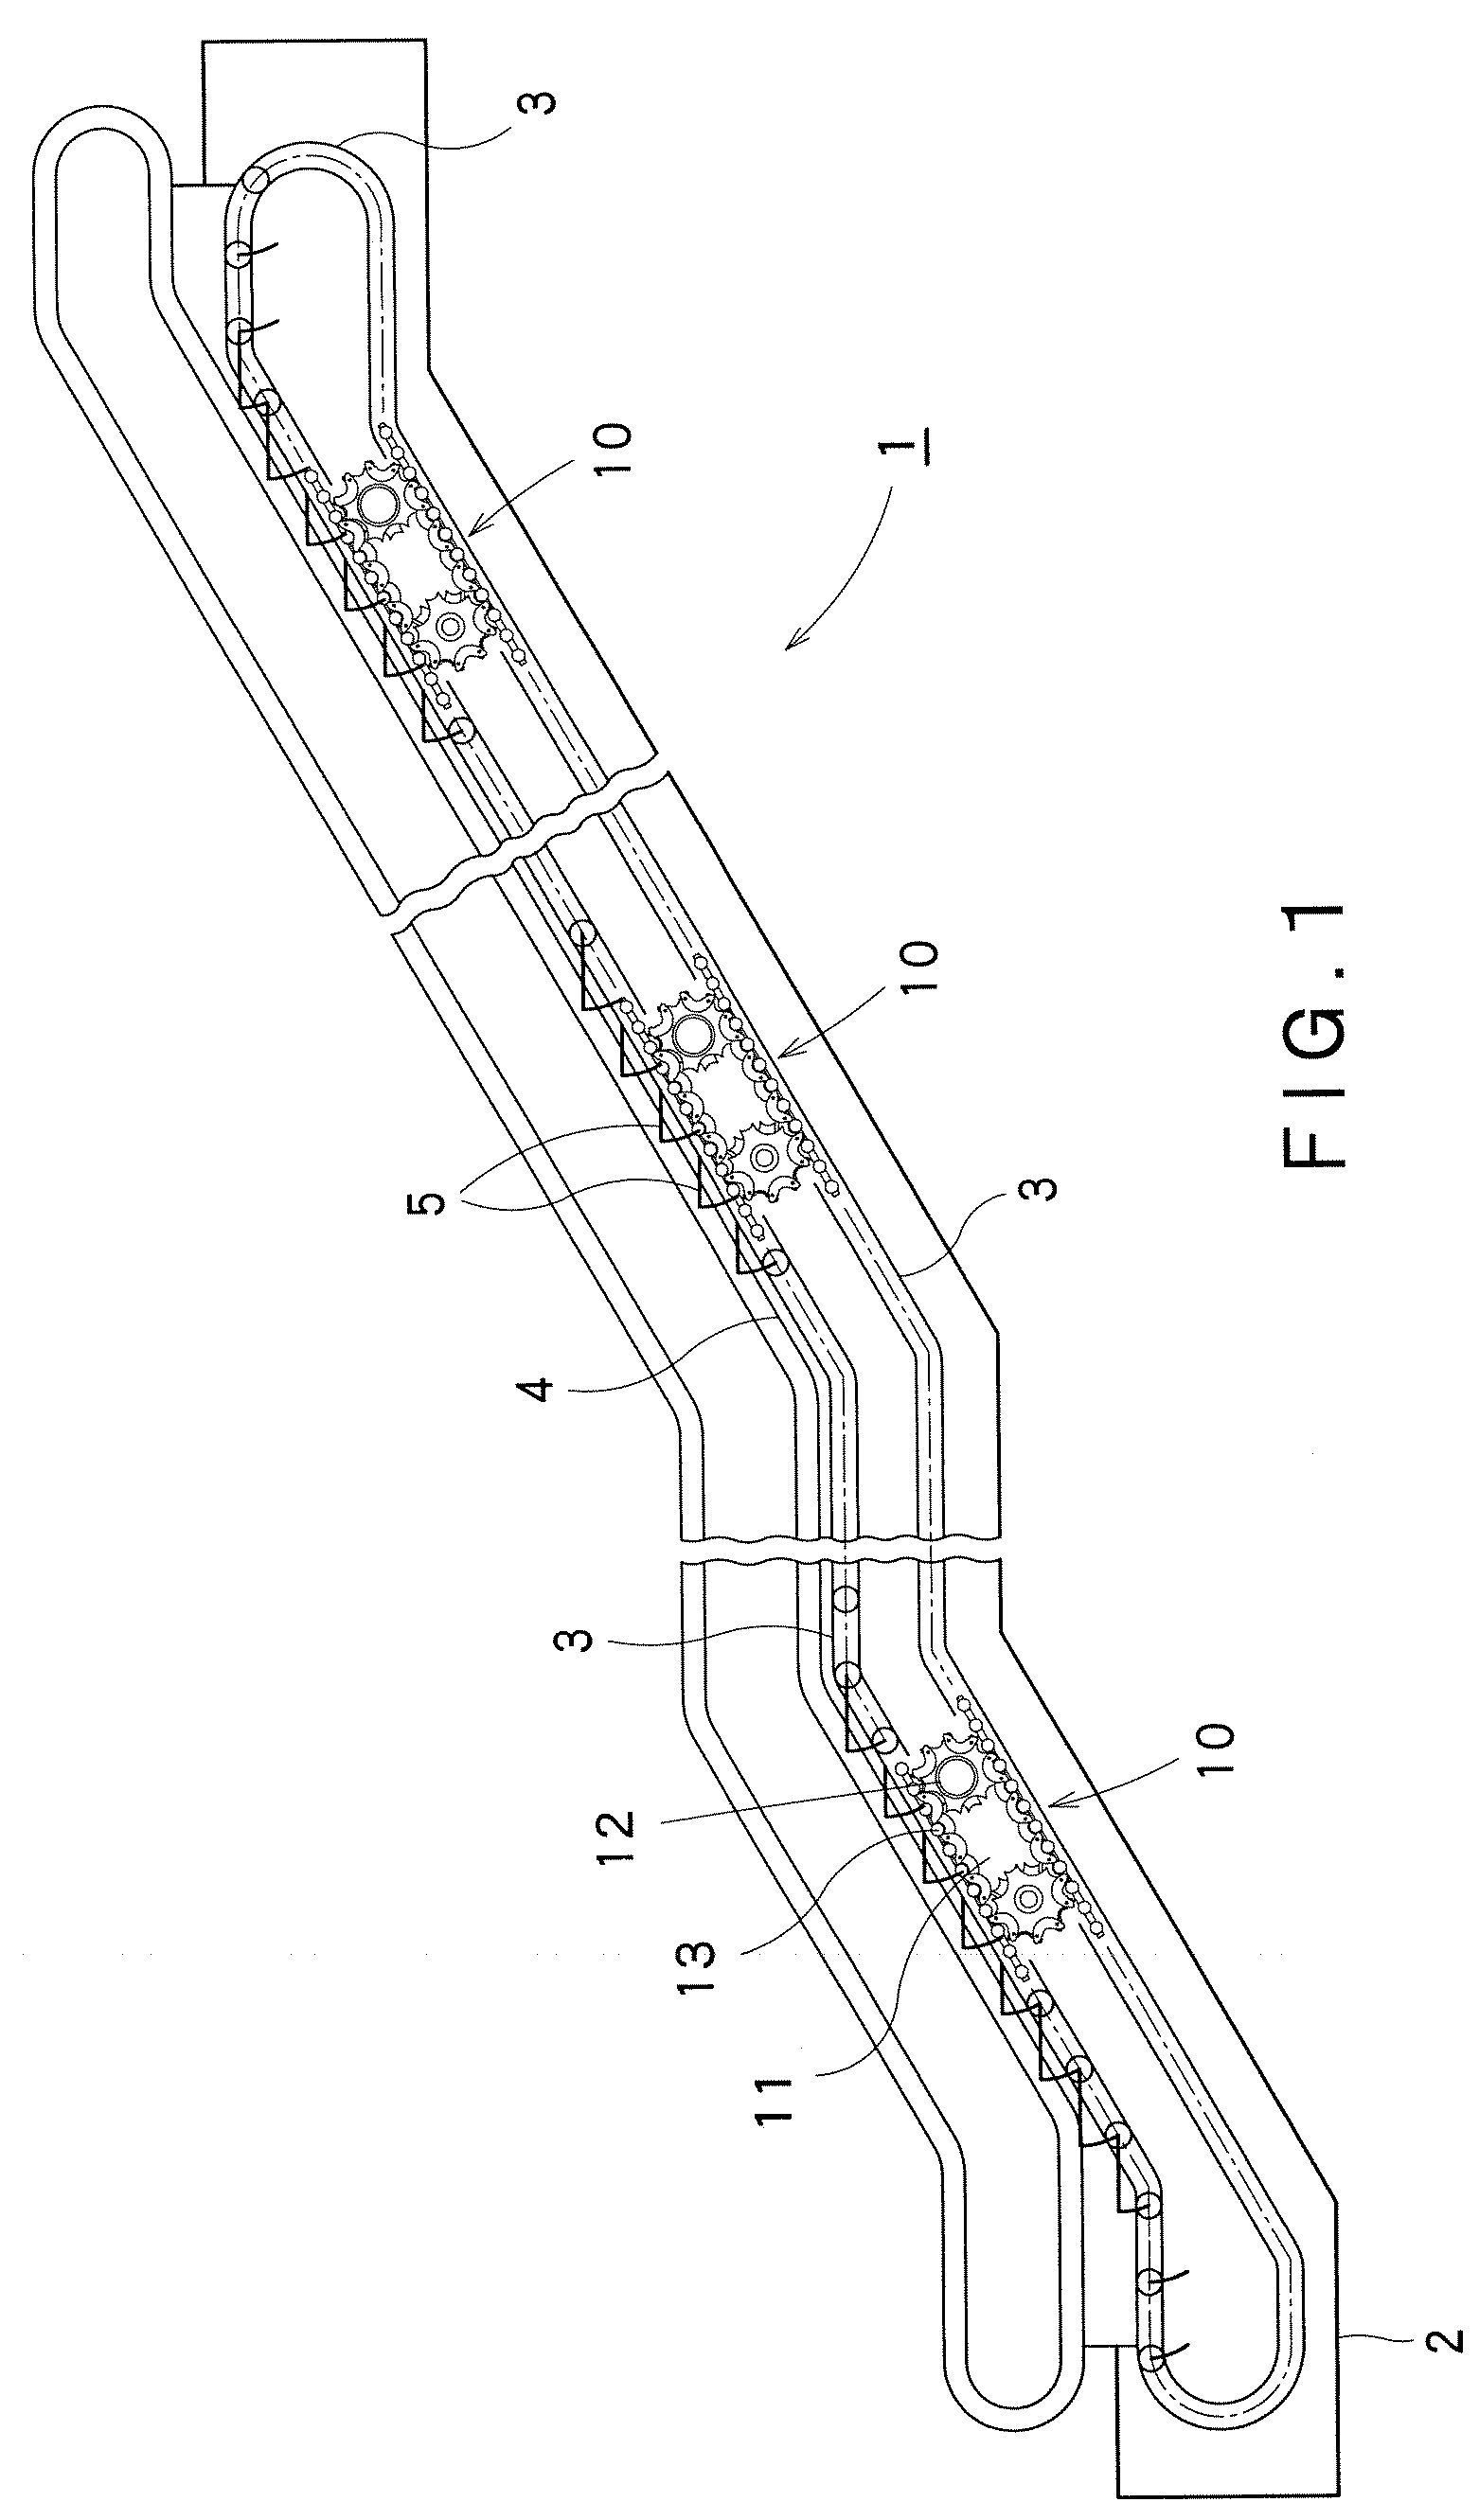 Conveyor apparatus